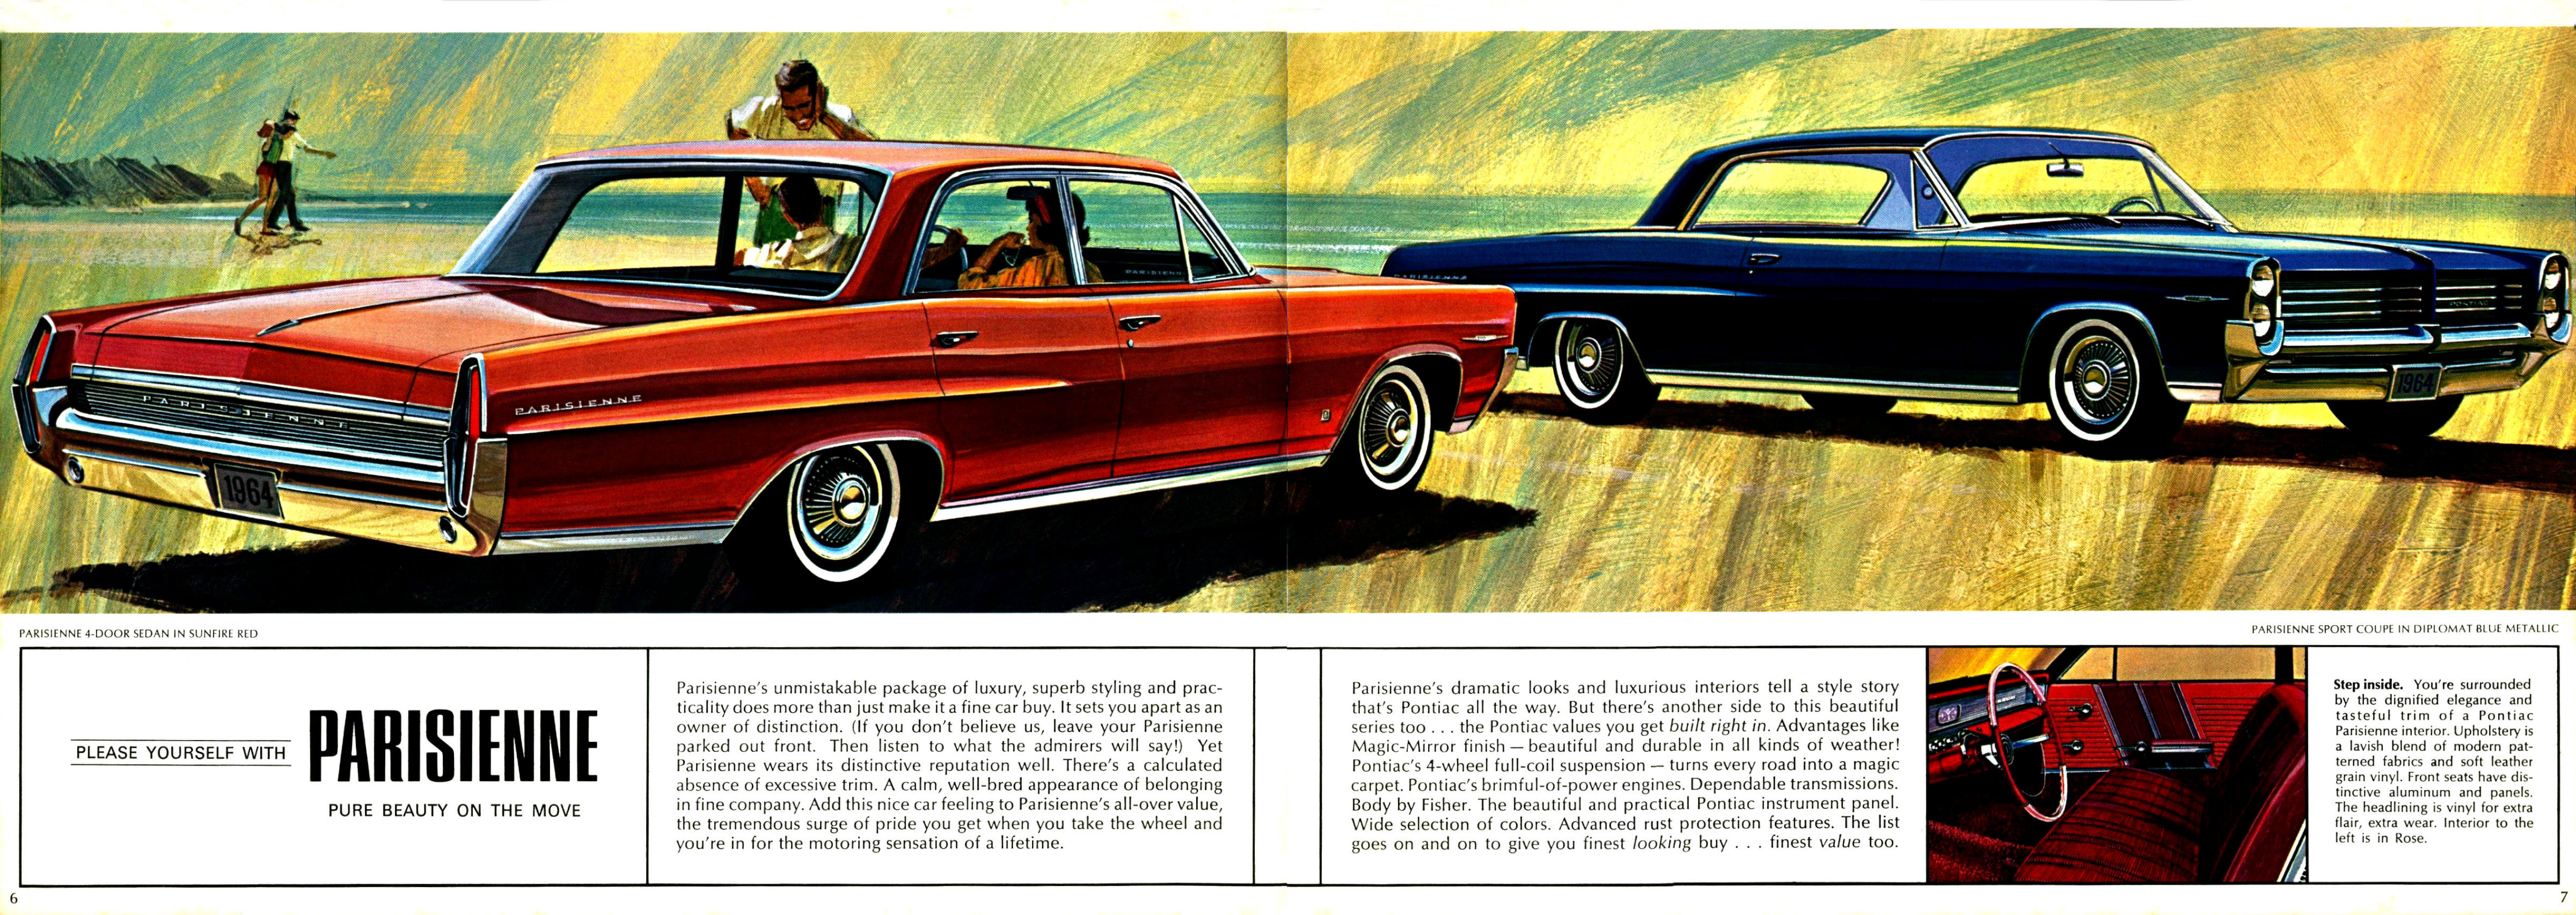 1964_Pontiac_Full_Size_Cdn-06-07